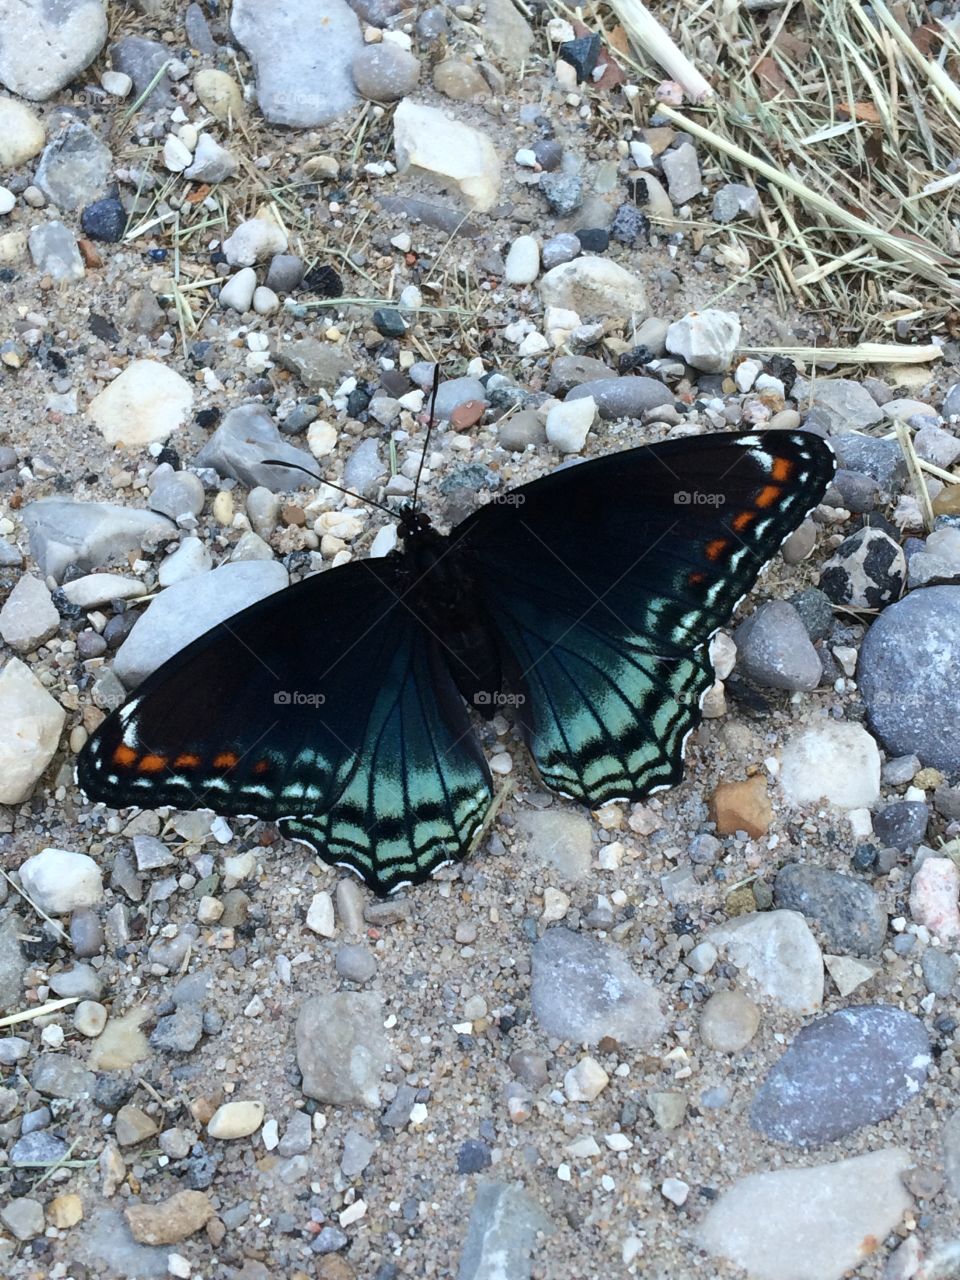 Basking butterfly
